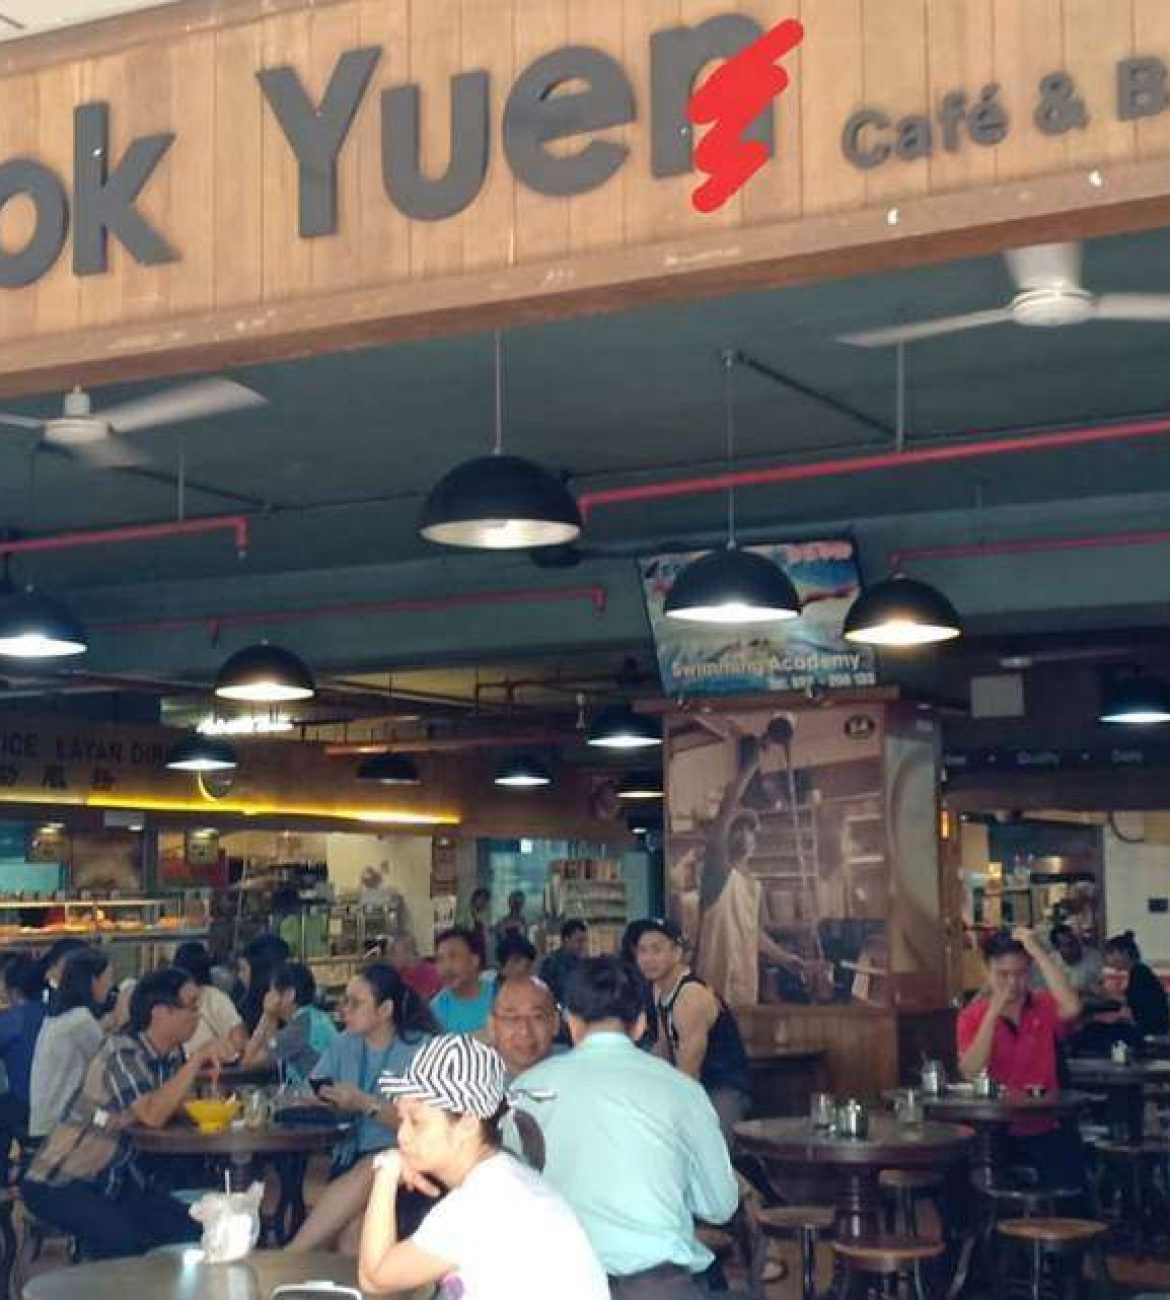 Fook Yuen – Funny Restaurant Name!